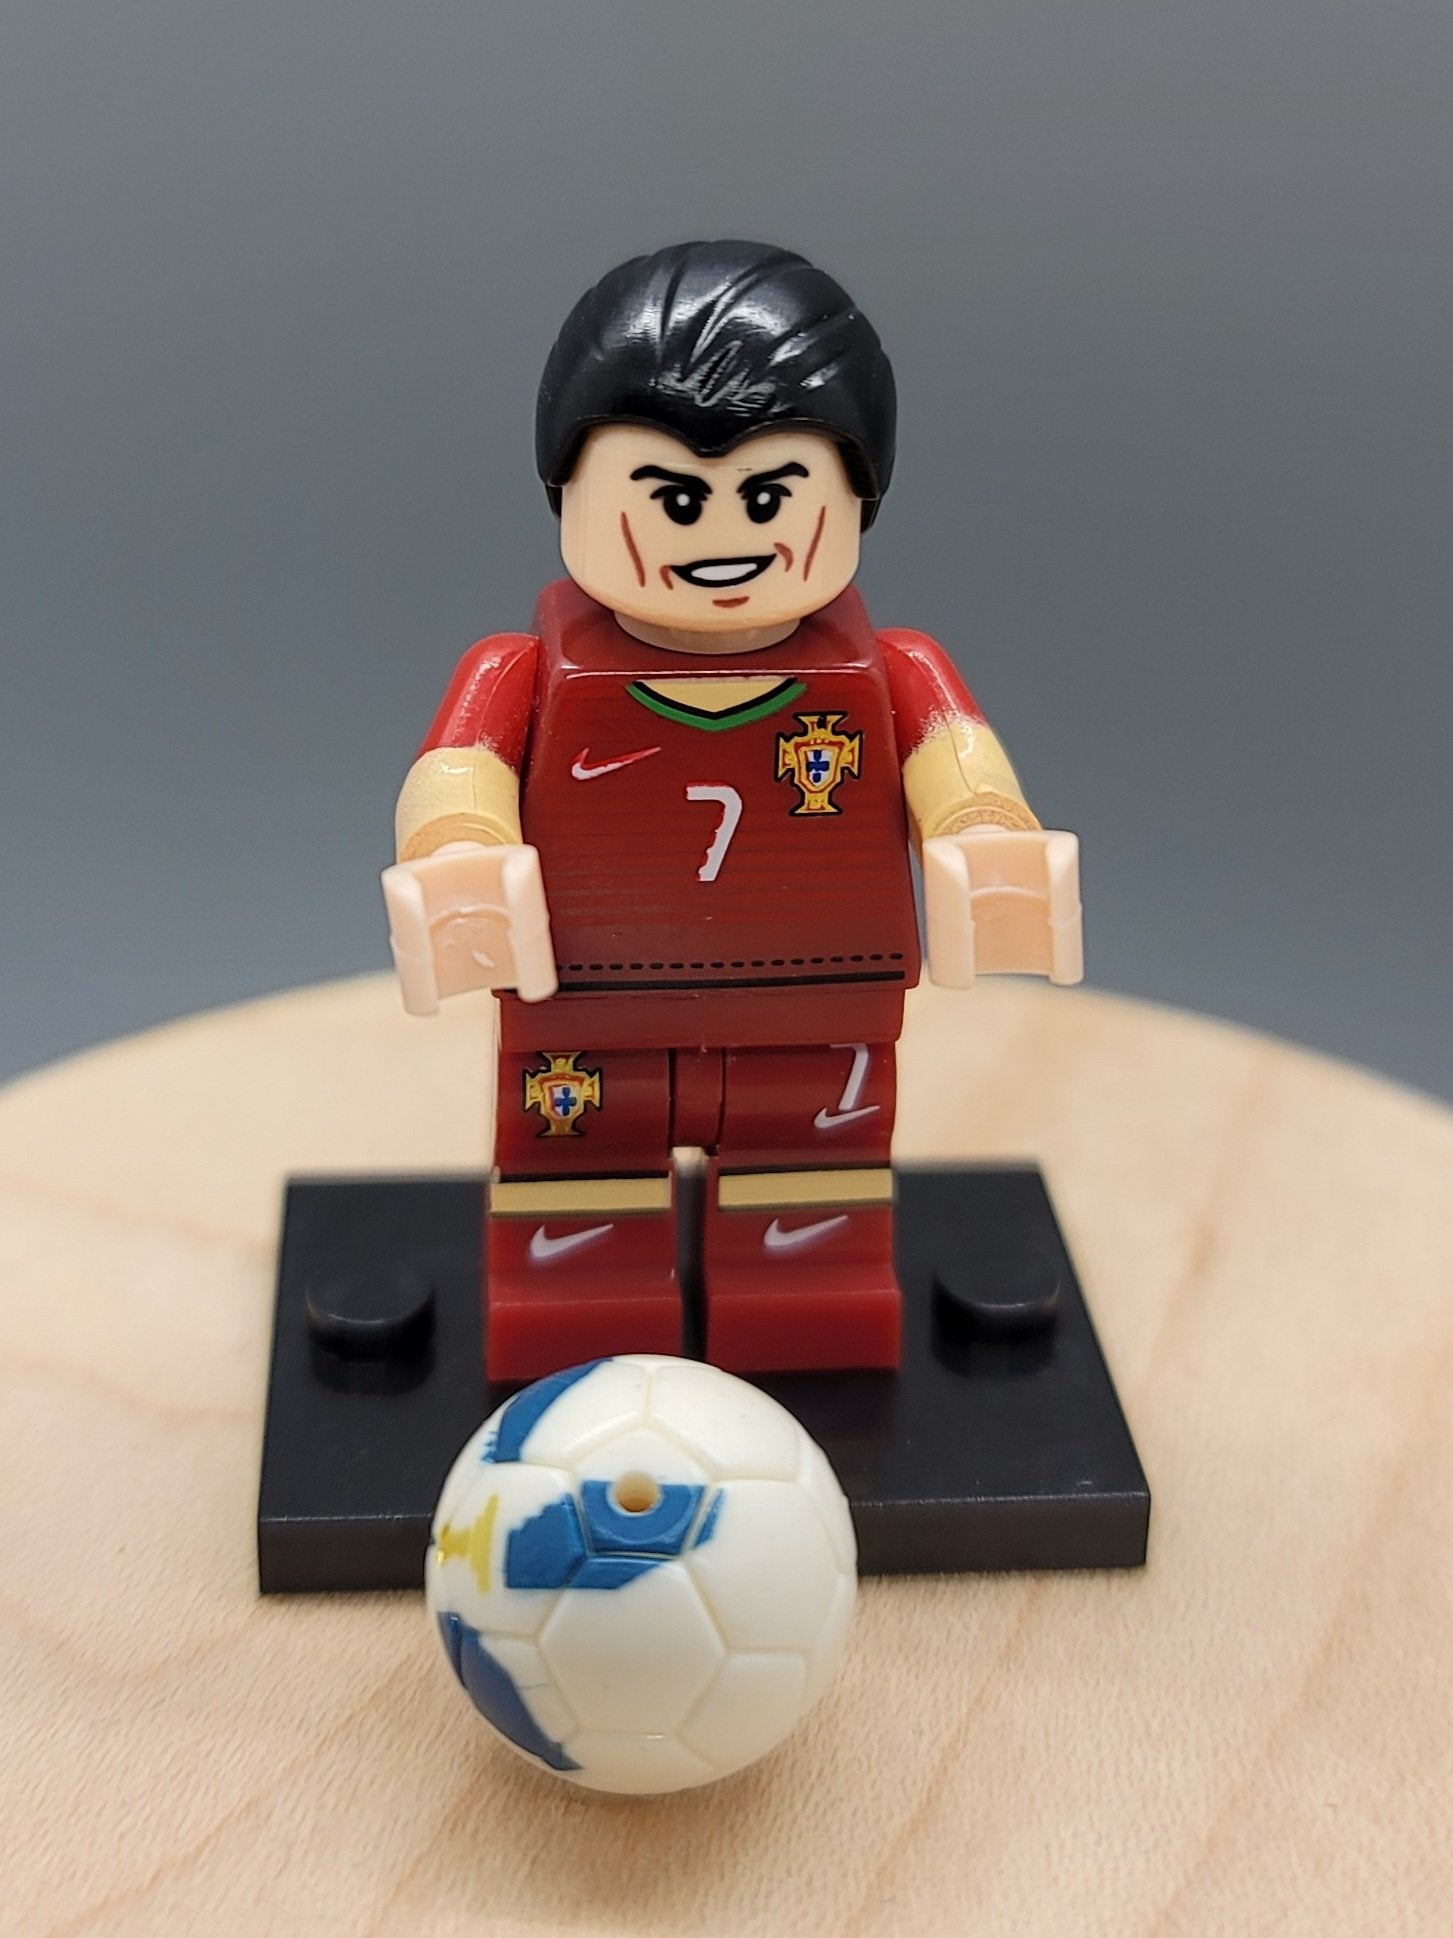 Christiano Ronaldo Custom minifigure by Beaus Bricks.   Brand new in package.  Please visit shop, lots more! - BeausBricks